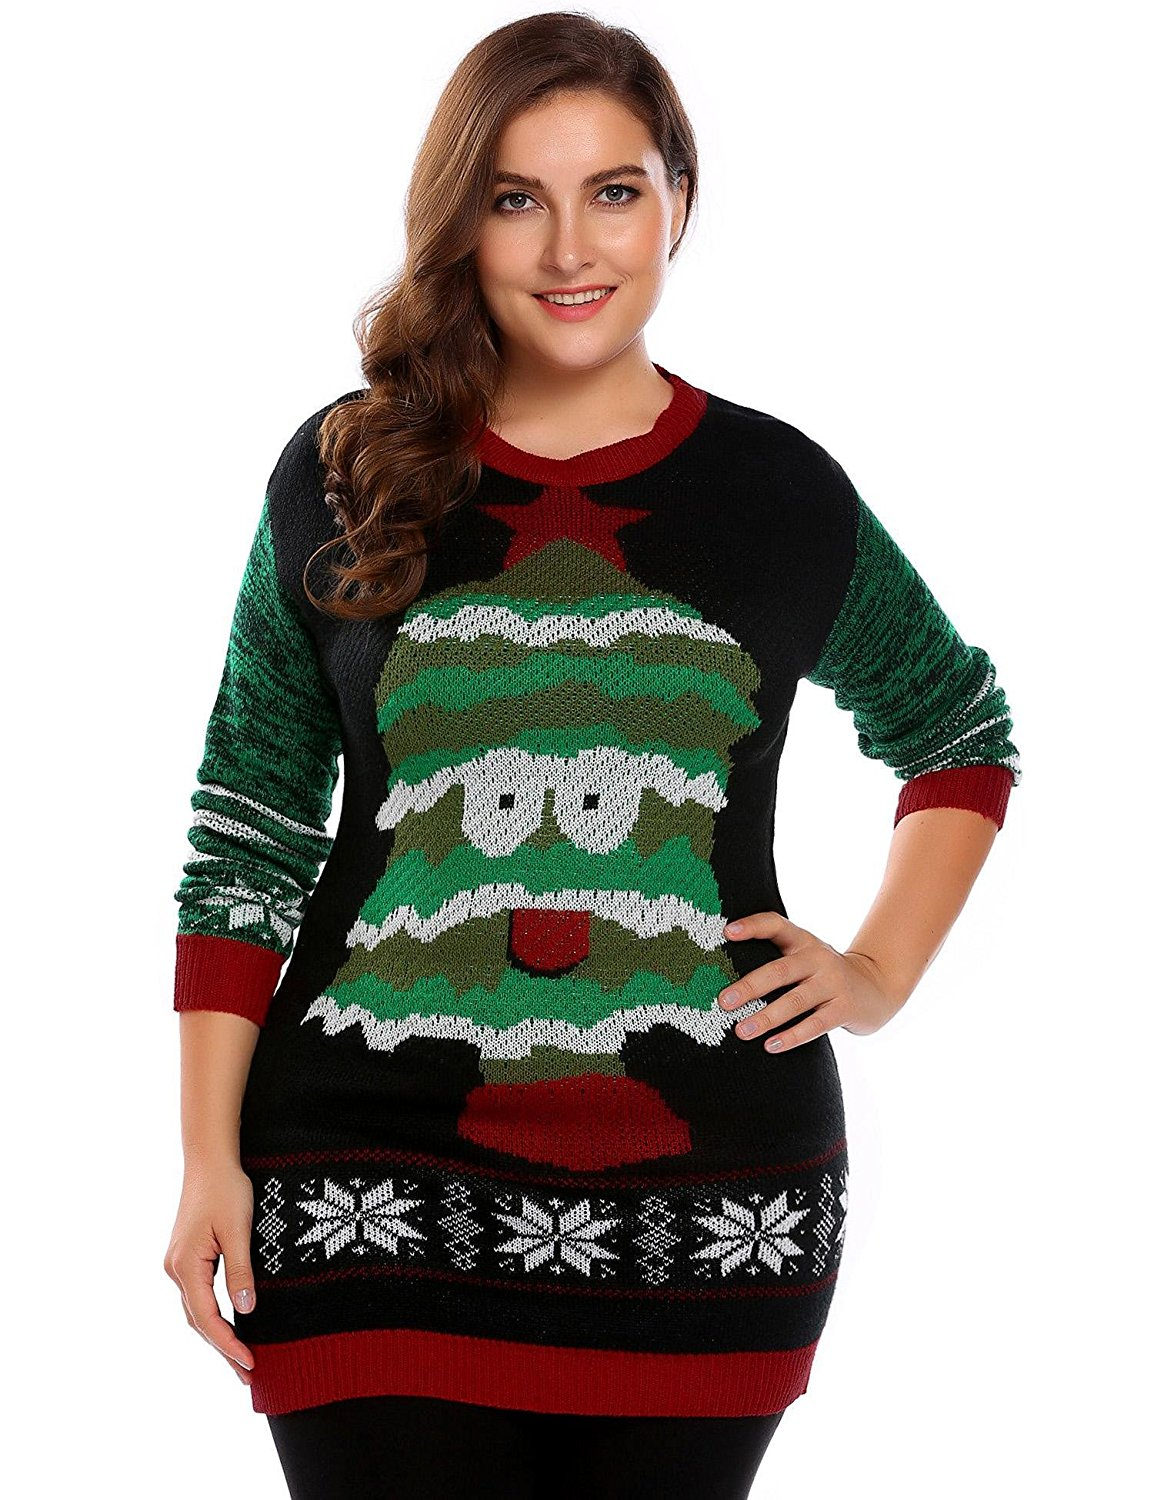 Retro Christmas Jumper Knitting Patterns Cheap Long Christmas Jumper Dress Find Long Christmas Jumper Dress